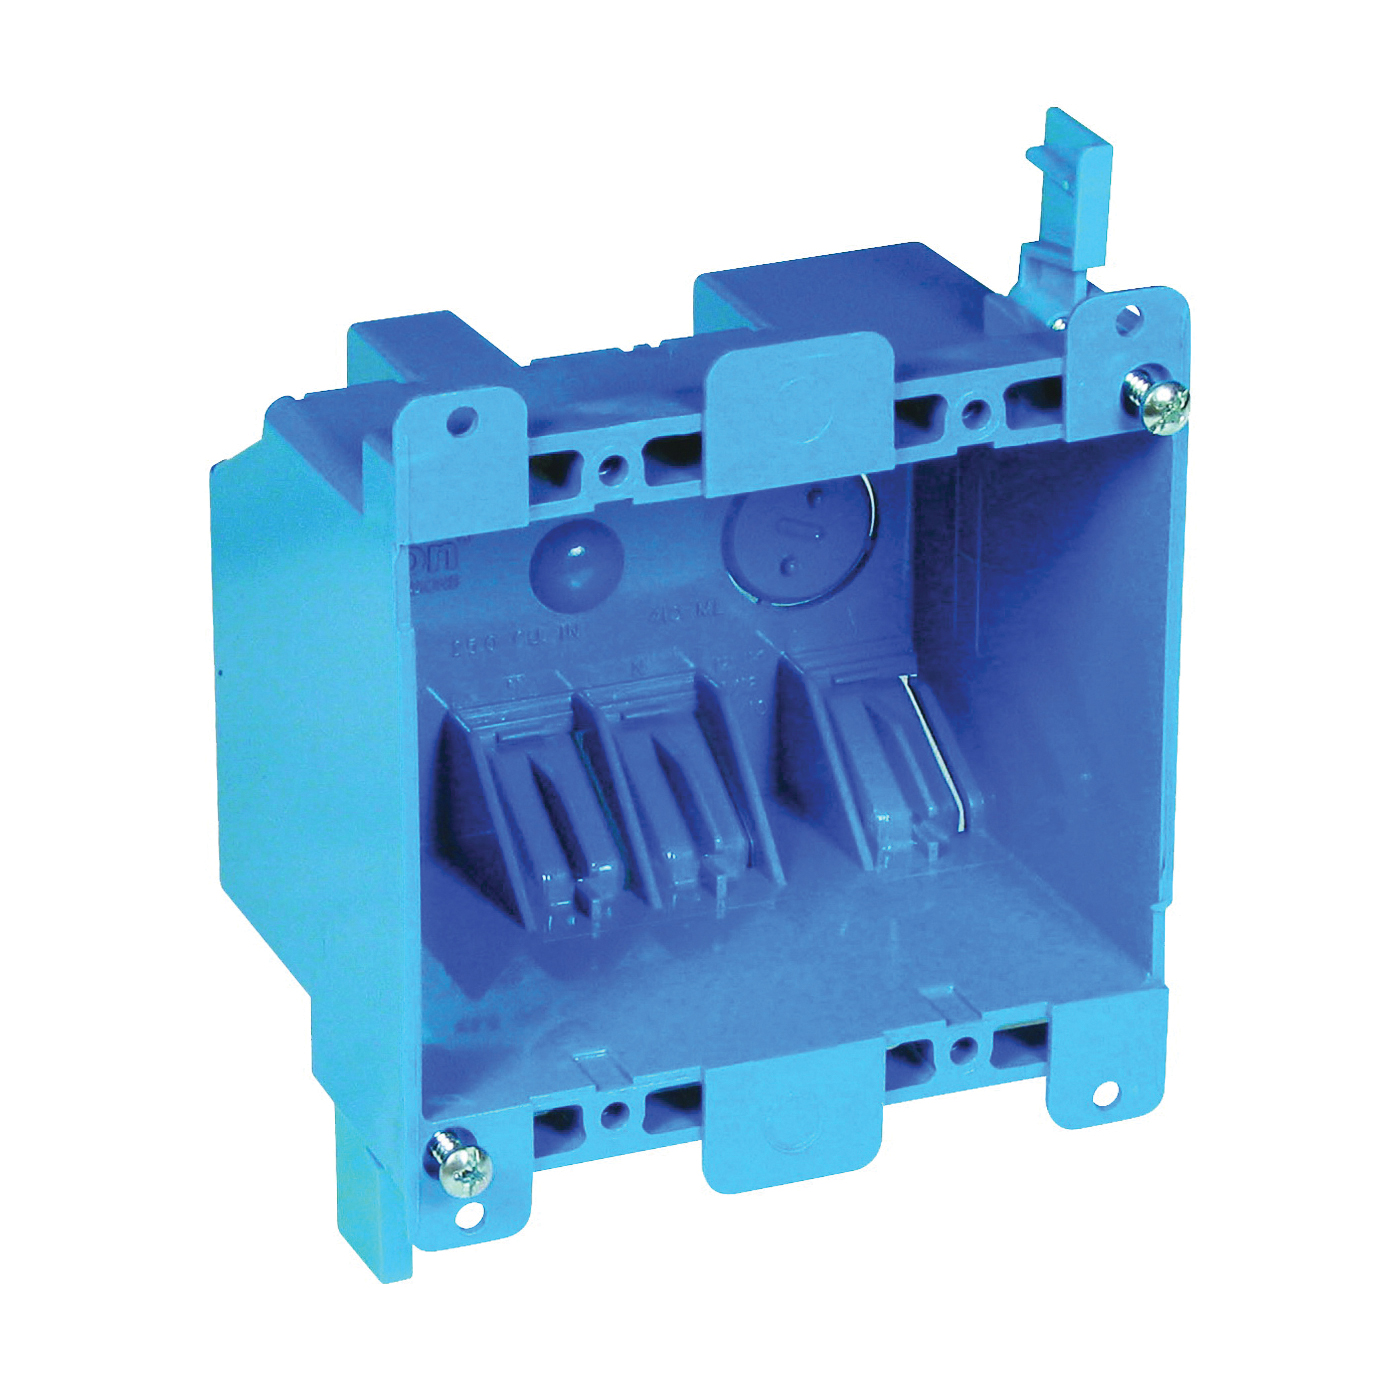 B225R-UPC Outlet Box, 2 -Gang, PVC, Blue, Clamp Mounting